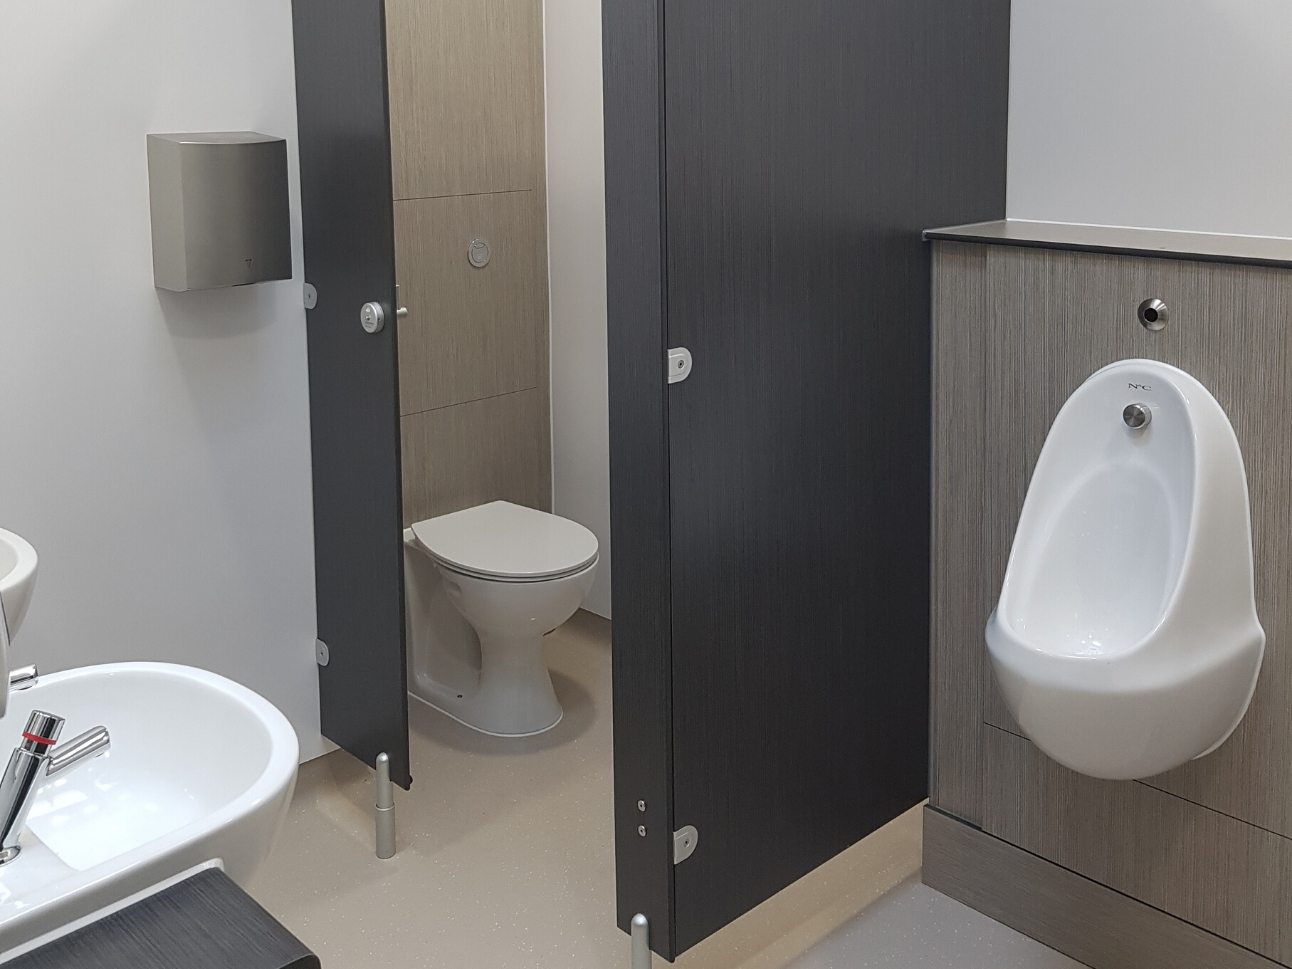 Poole Grammar School Washroom Renovation | Commercial Washrooms